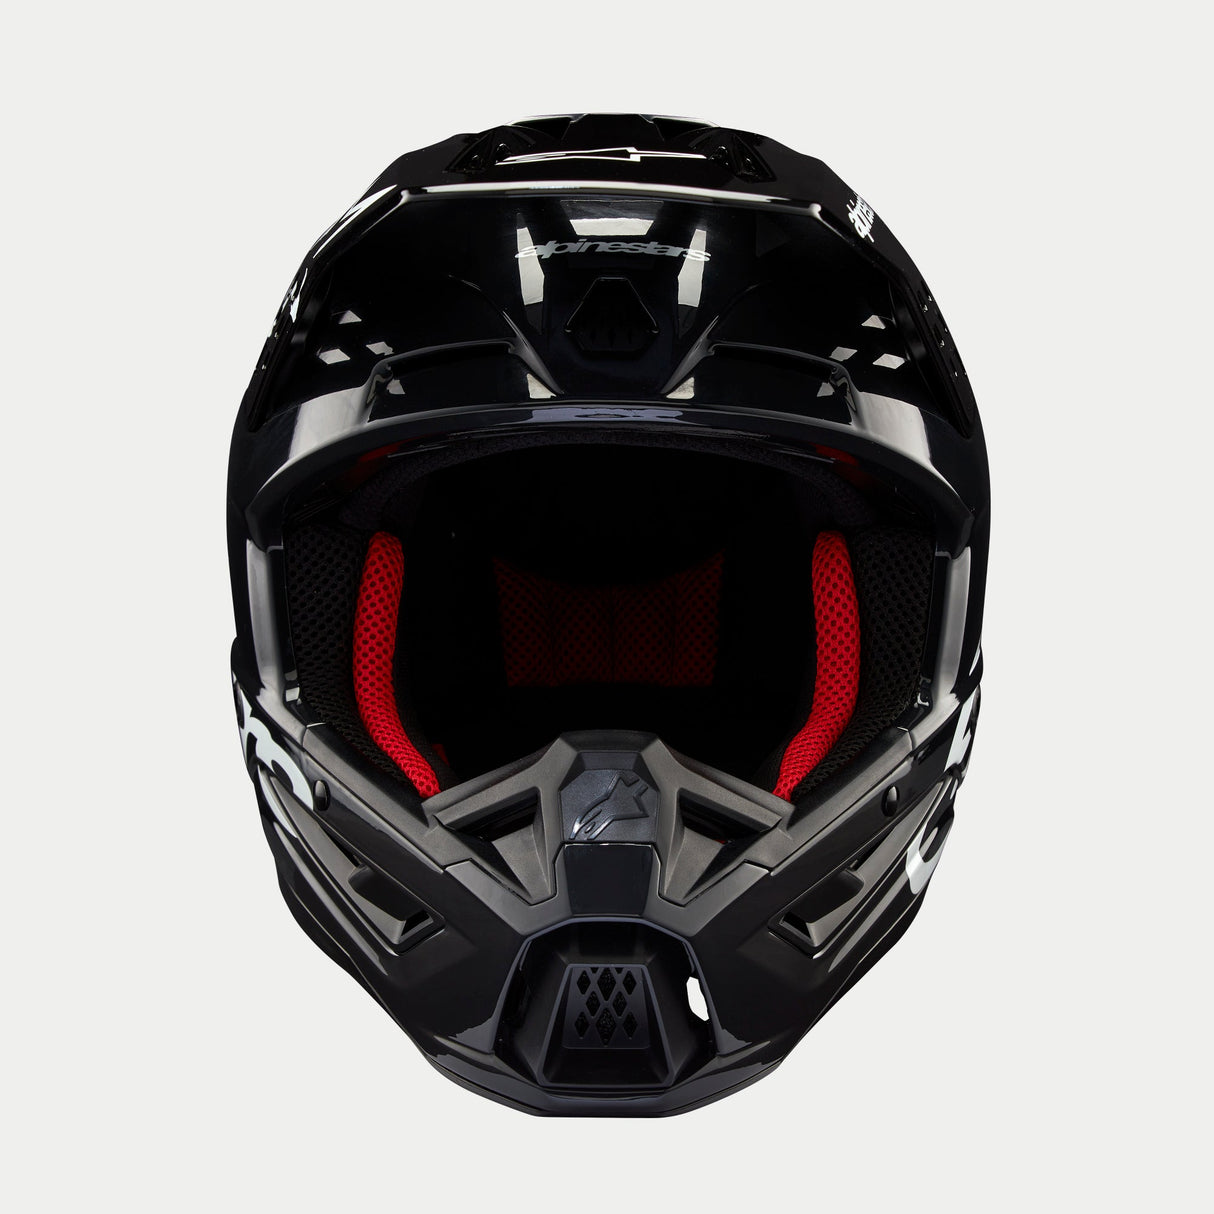 Alpinestars SM5 Corp Ece 22.06 Helmet - Dark Gray Gloss